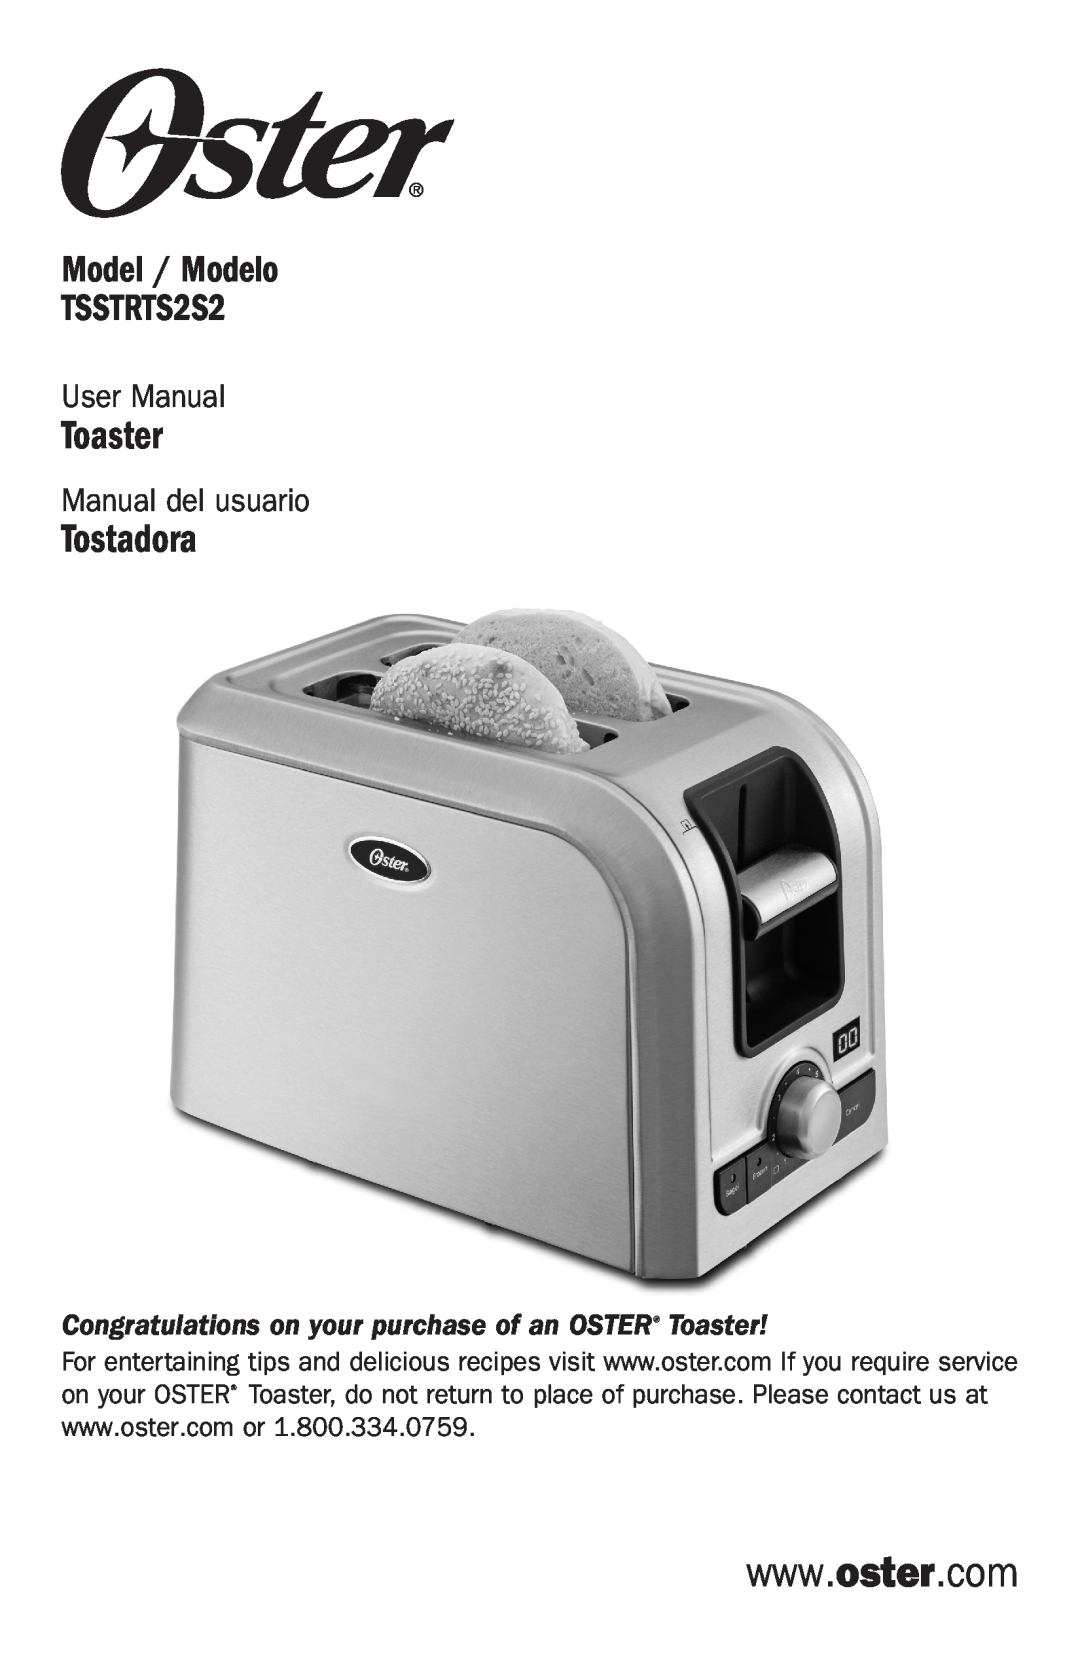 Oster user manual Model / Modelo TSSTRTS2S2, Manual del usuario, Toaster, Tostadora 